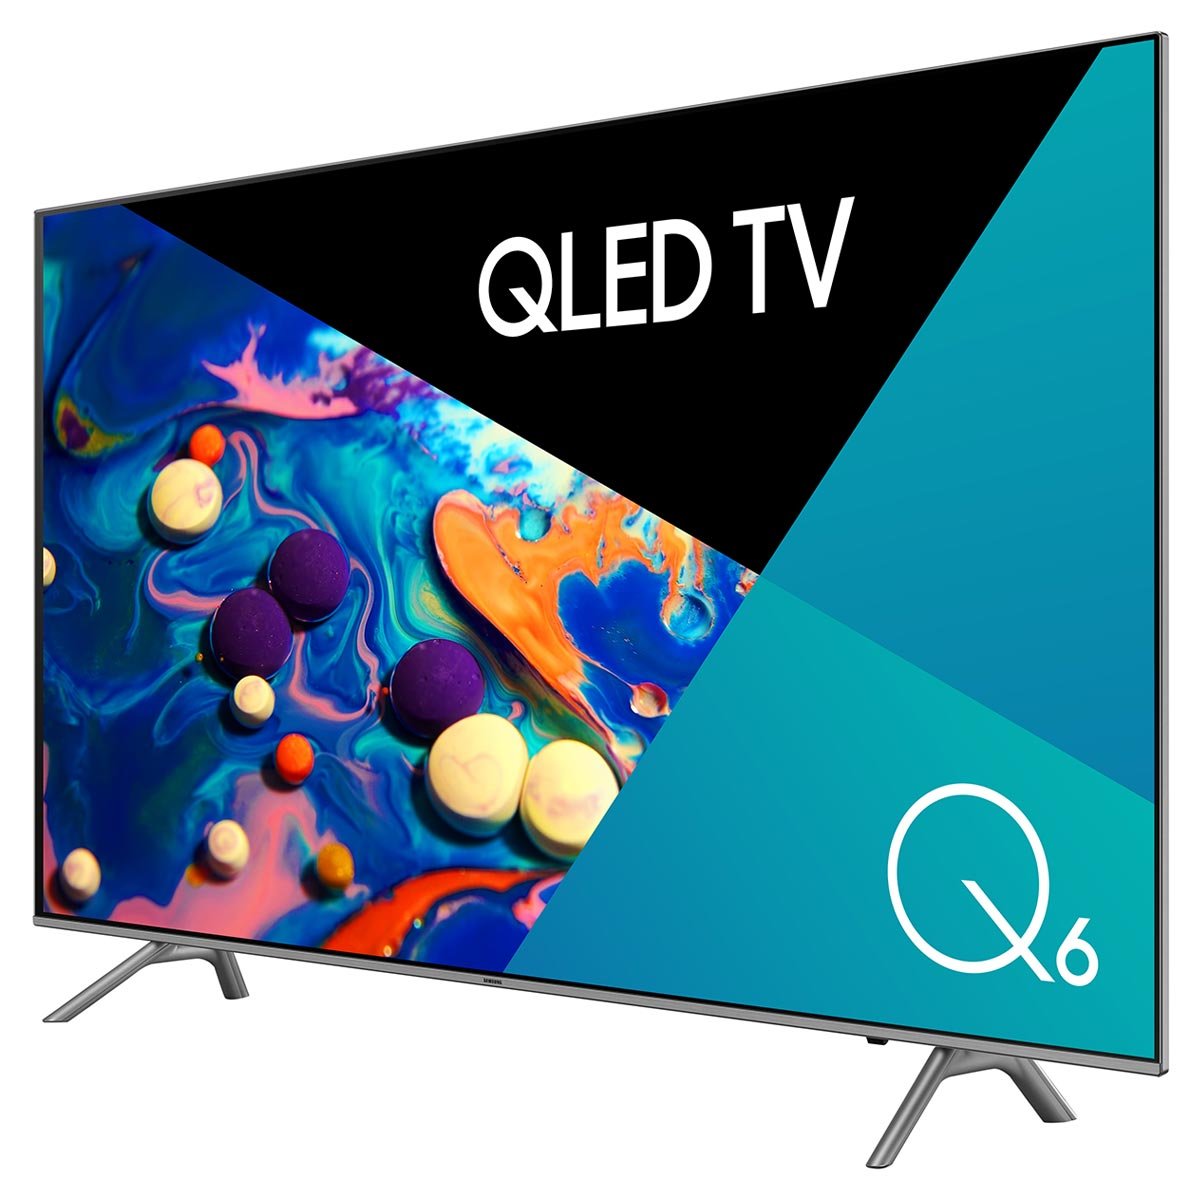 NEW Samsung QA55Q6FN 55 Inch 139cm Smart 4K Ultra HD QLED TV | eBay